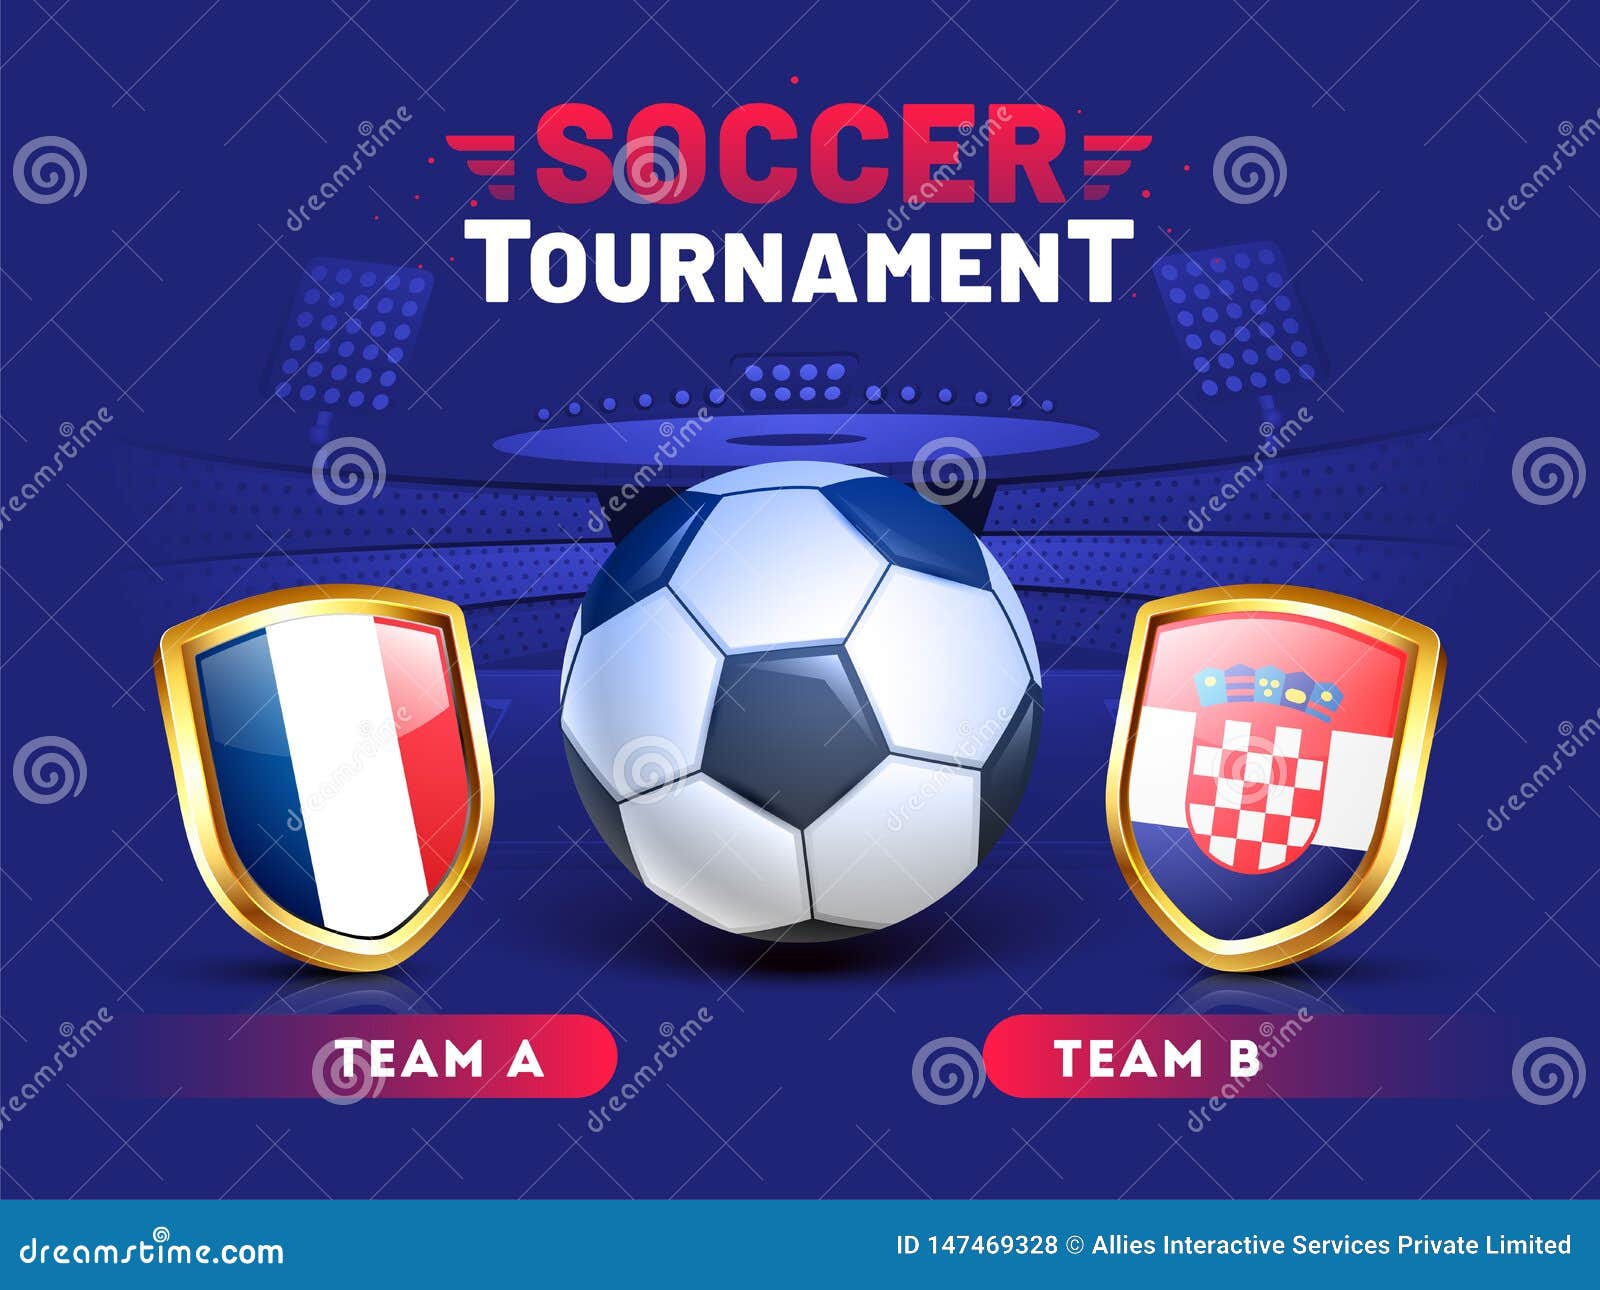 Soccer Tournament Banner Or Poster Design With Illustration Of Soccer ...